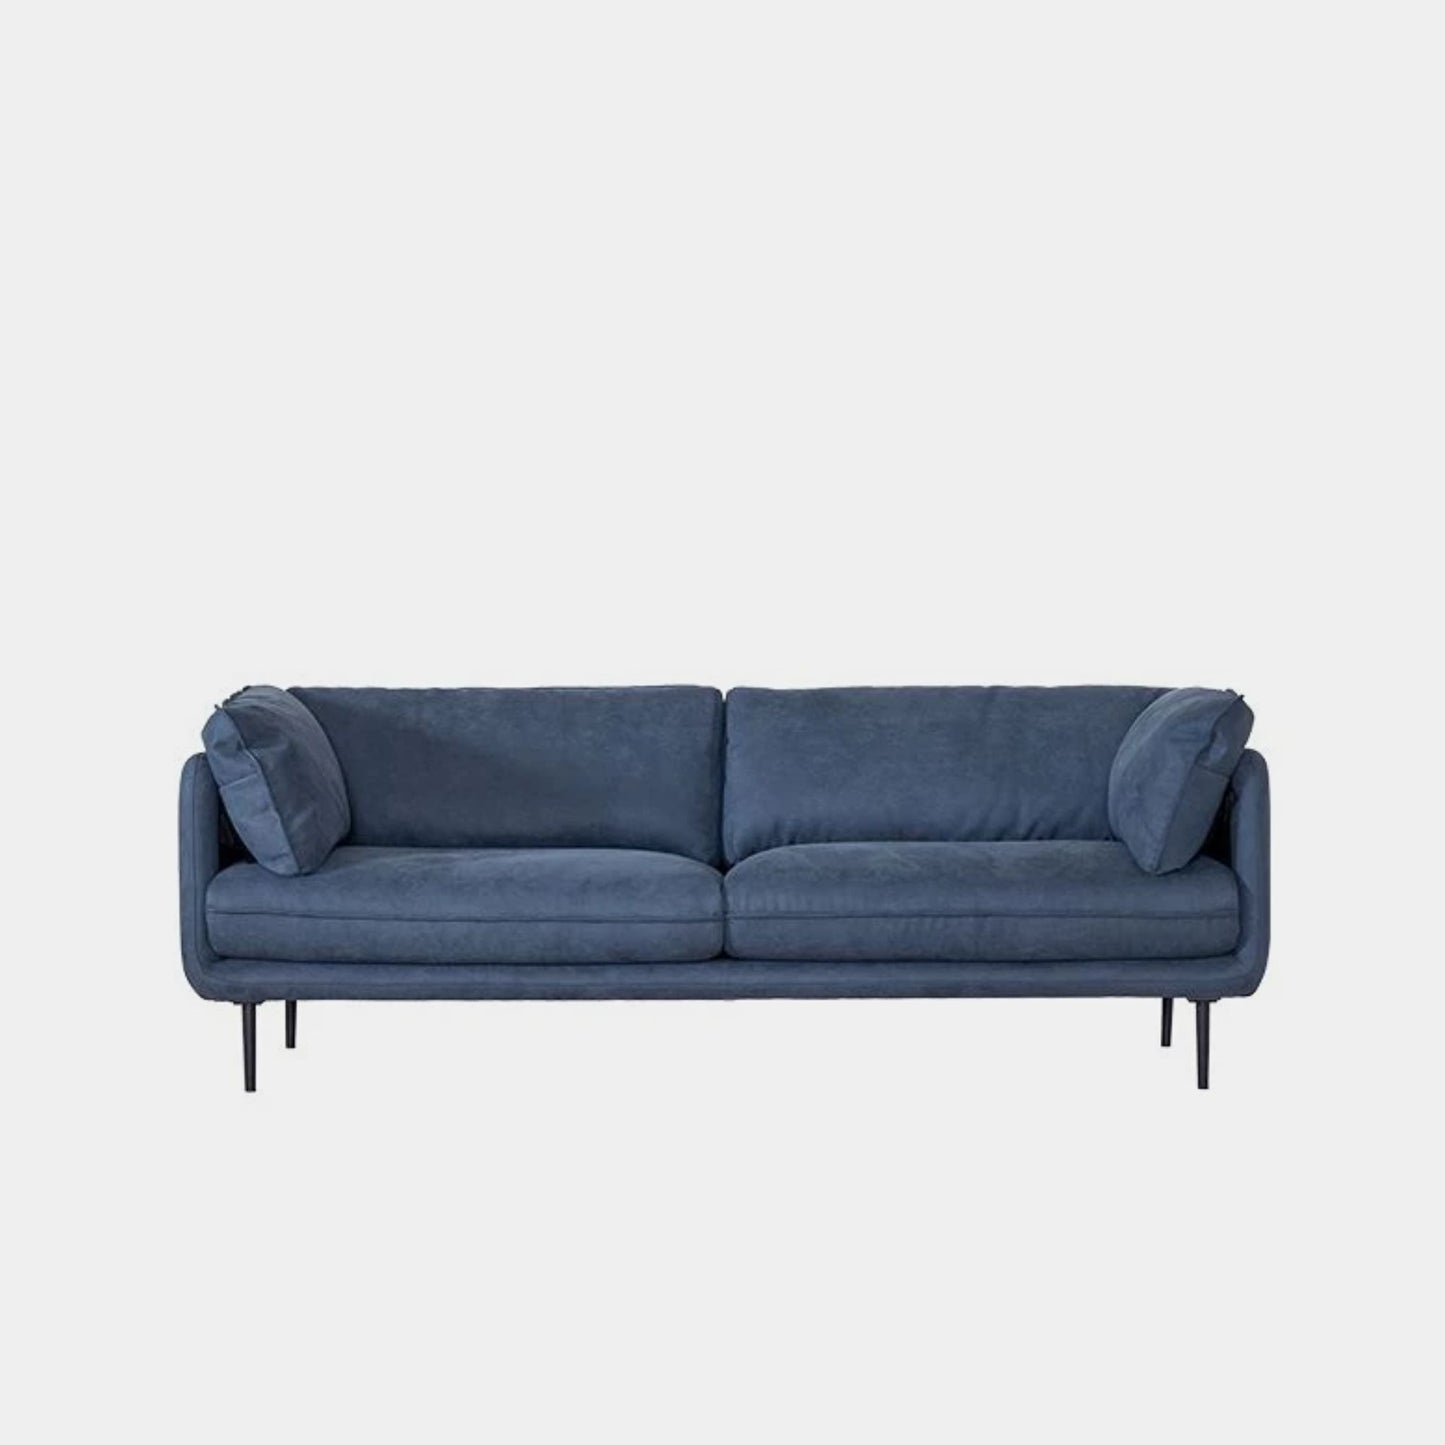 Cuddle blue fabric sofa